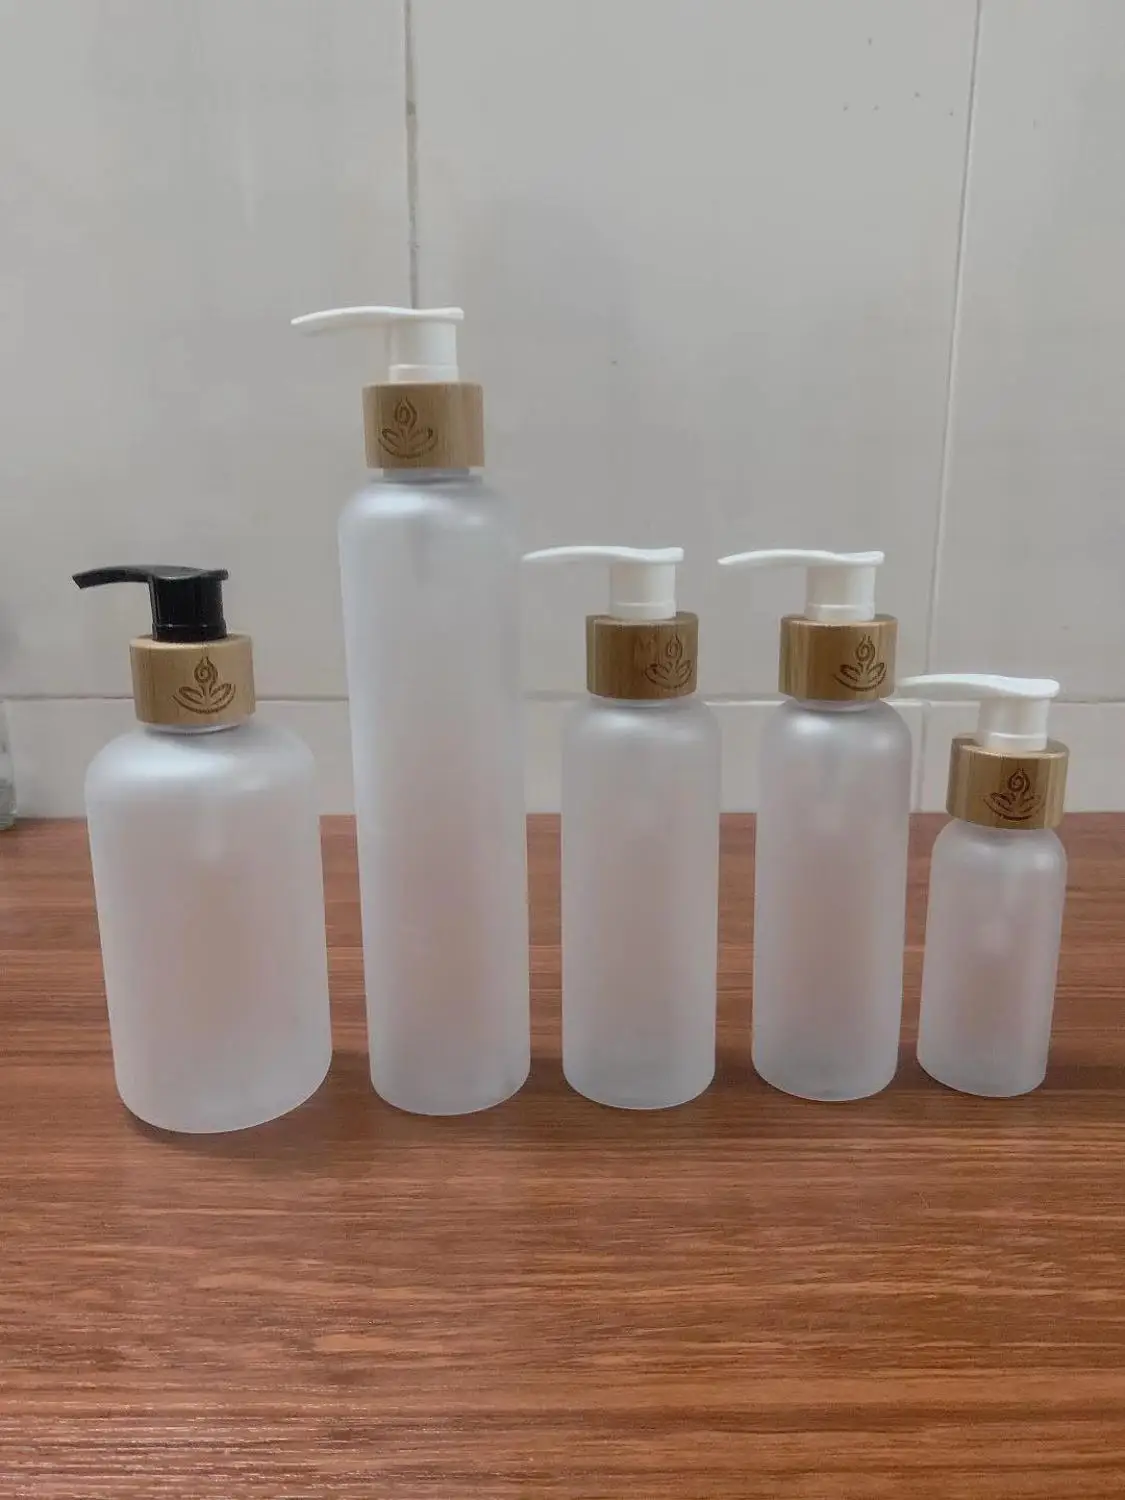 8 oz 120ml 100ml Refillable Mini Perfume Spray Bottle Empty Cosmetic Containers Plastic Atomizer Portable Travel Perfume Bottle